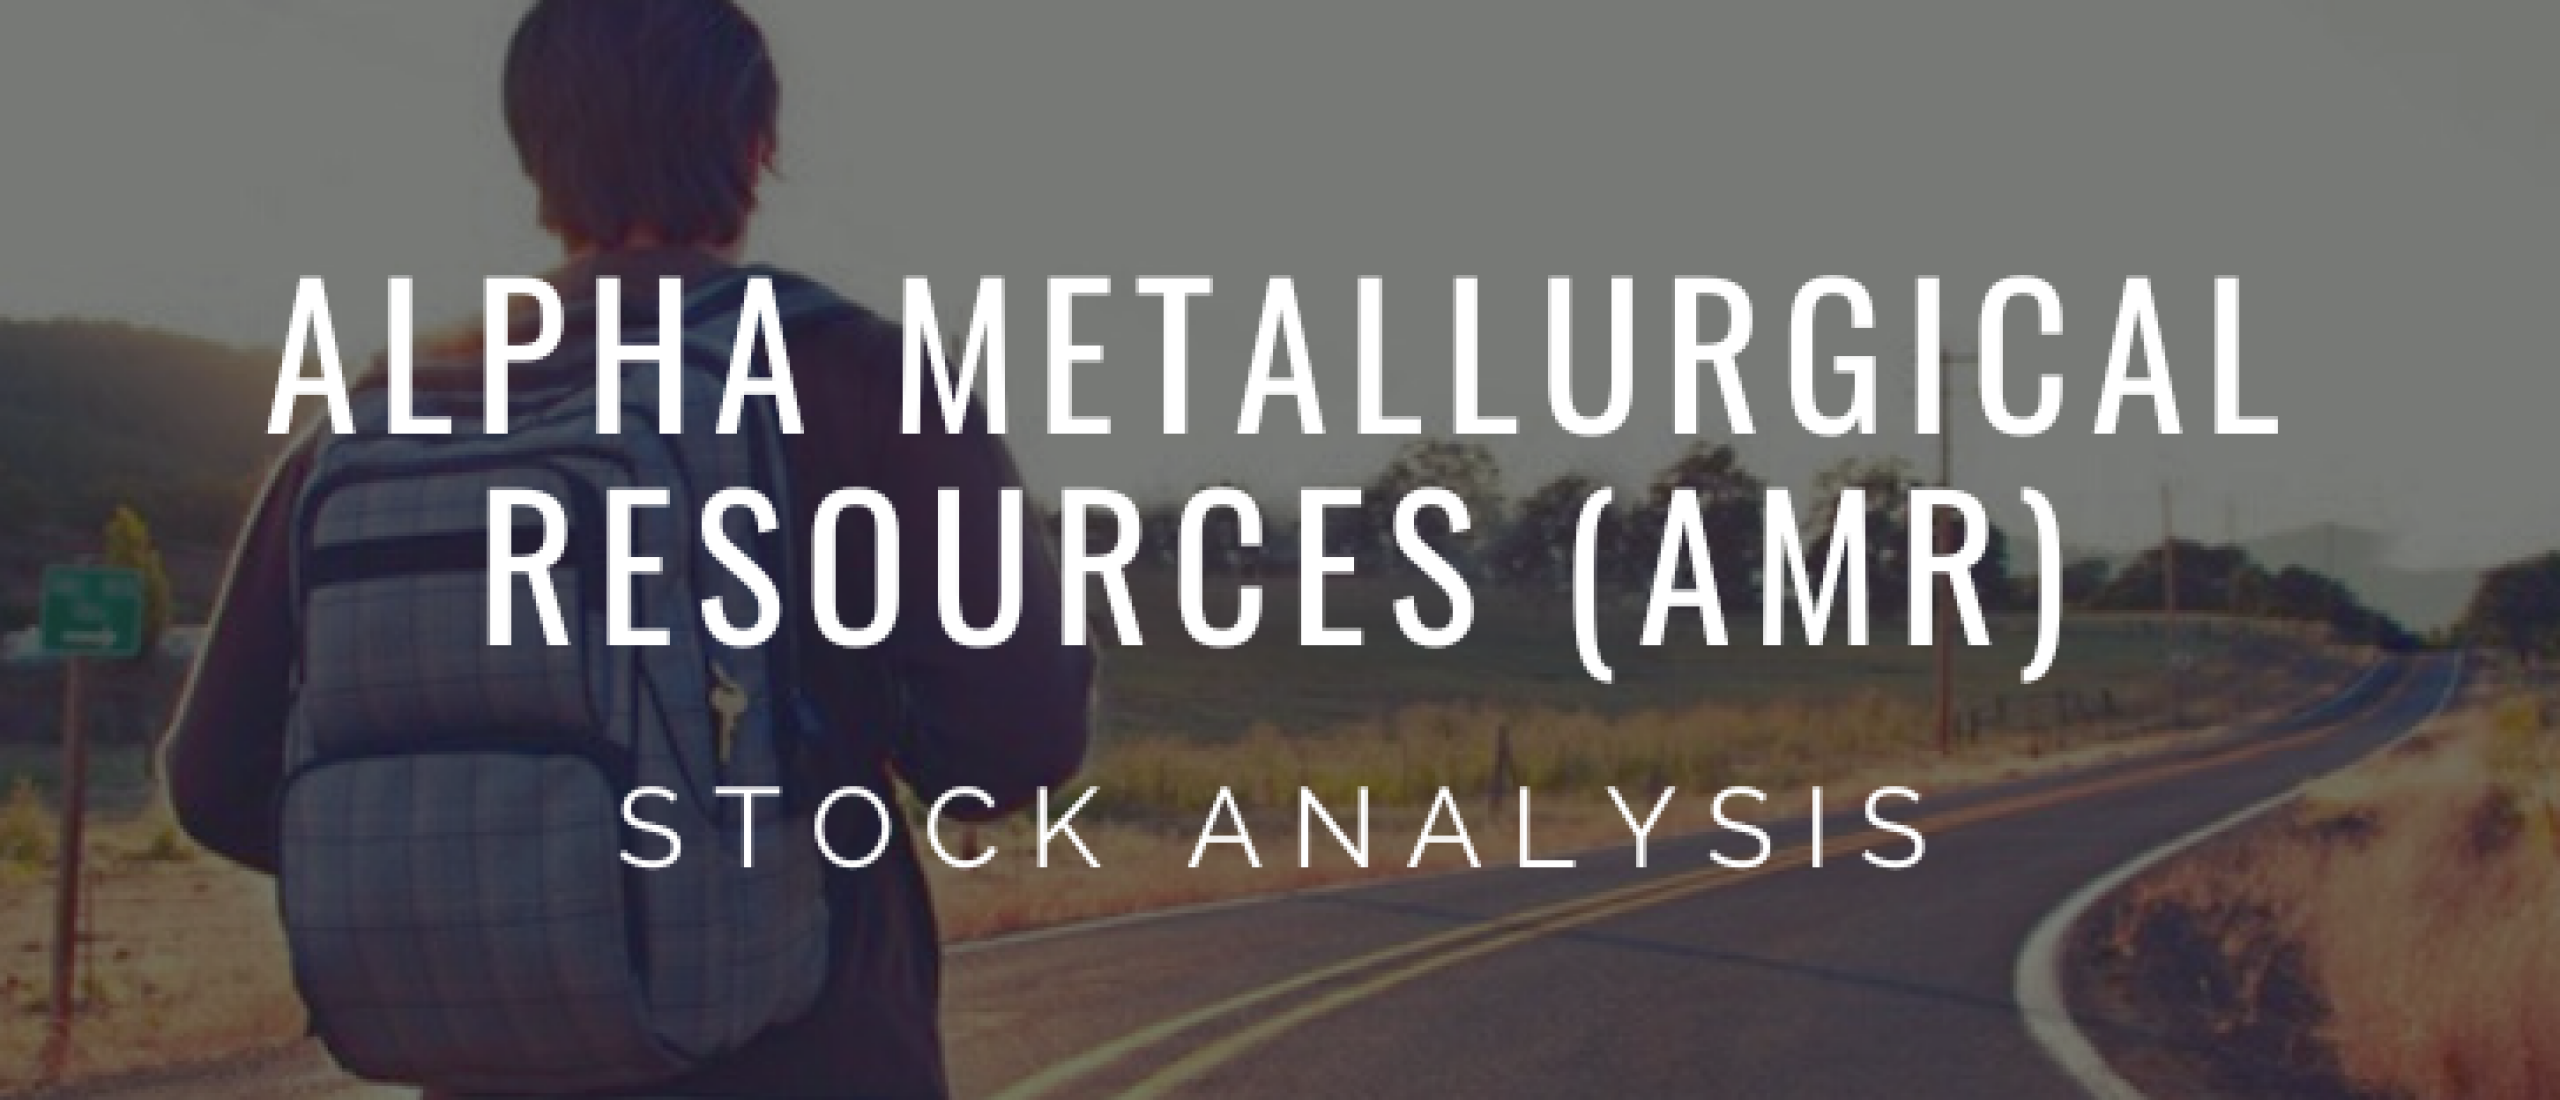 Alpha Metallurgical Resources (AMR) Stock Analysis